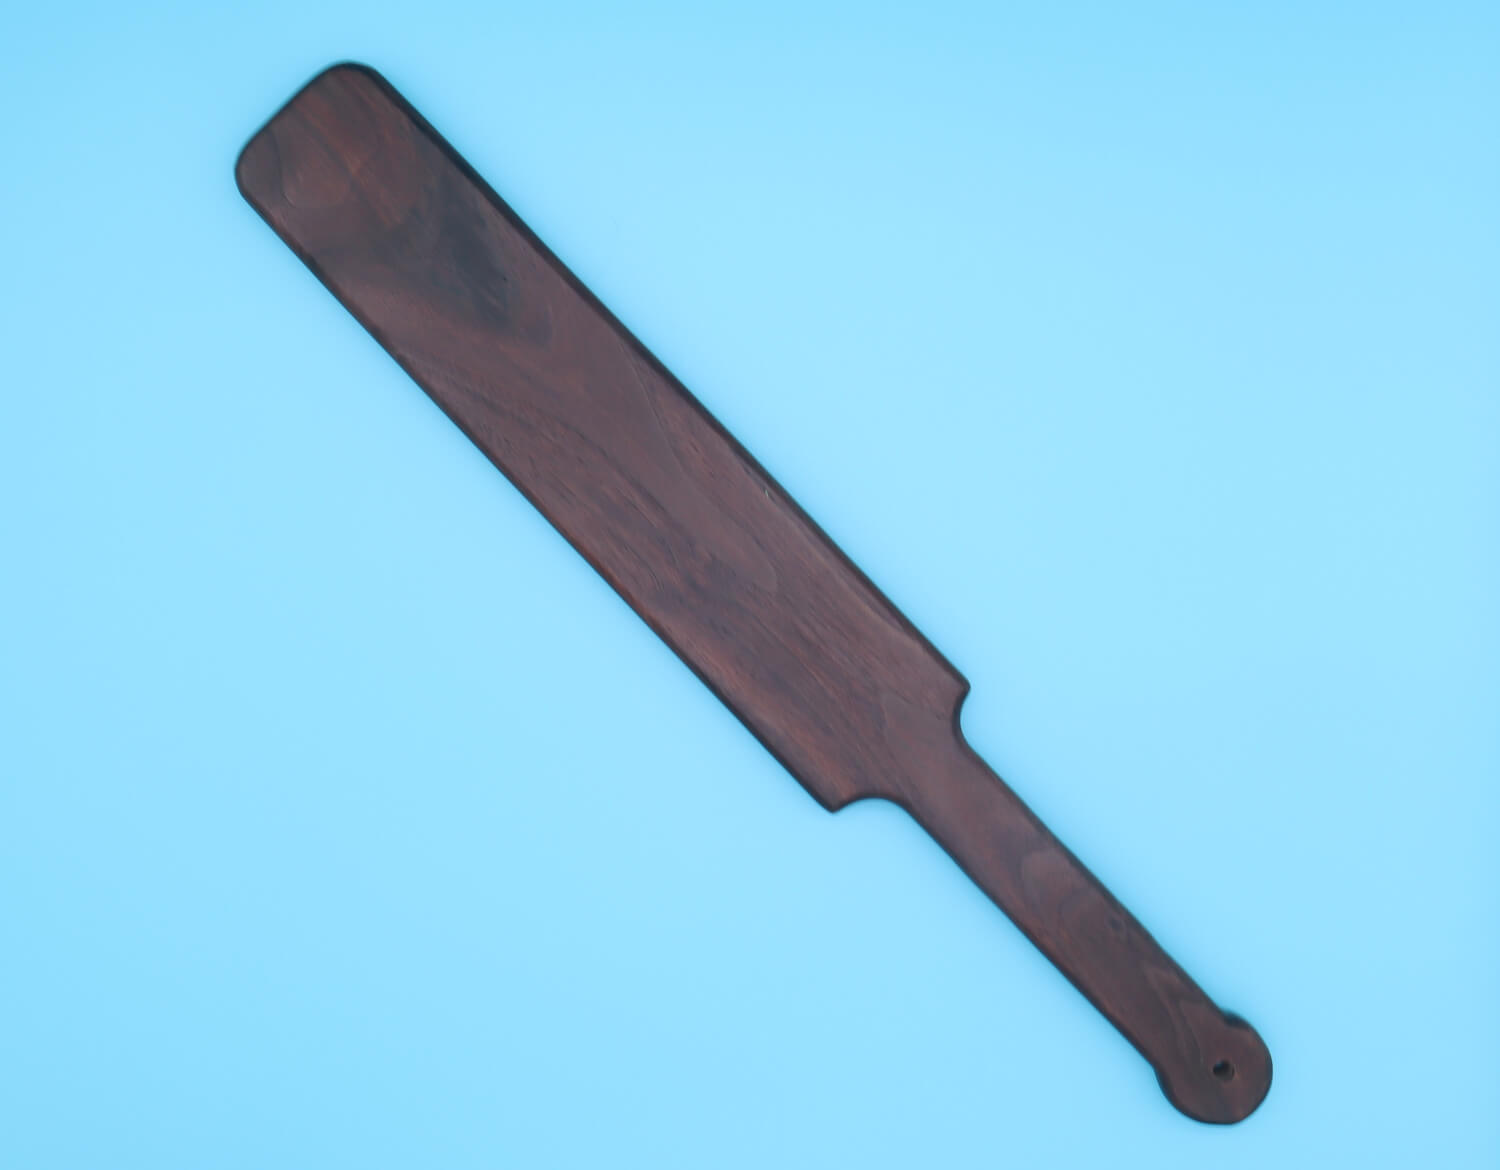 large wooden paddle made of black walnut over blue background